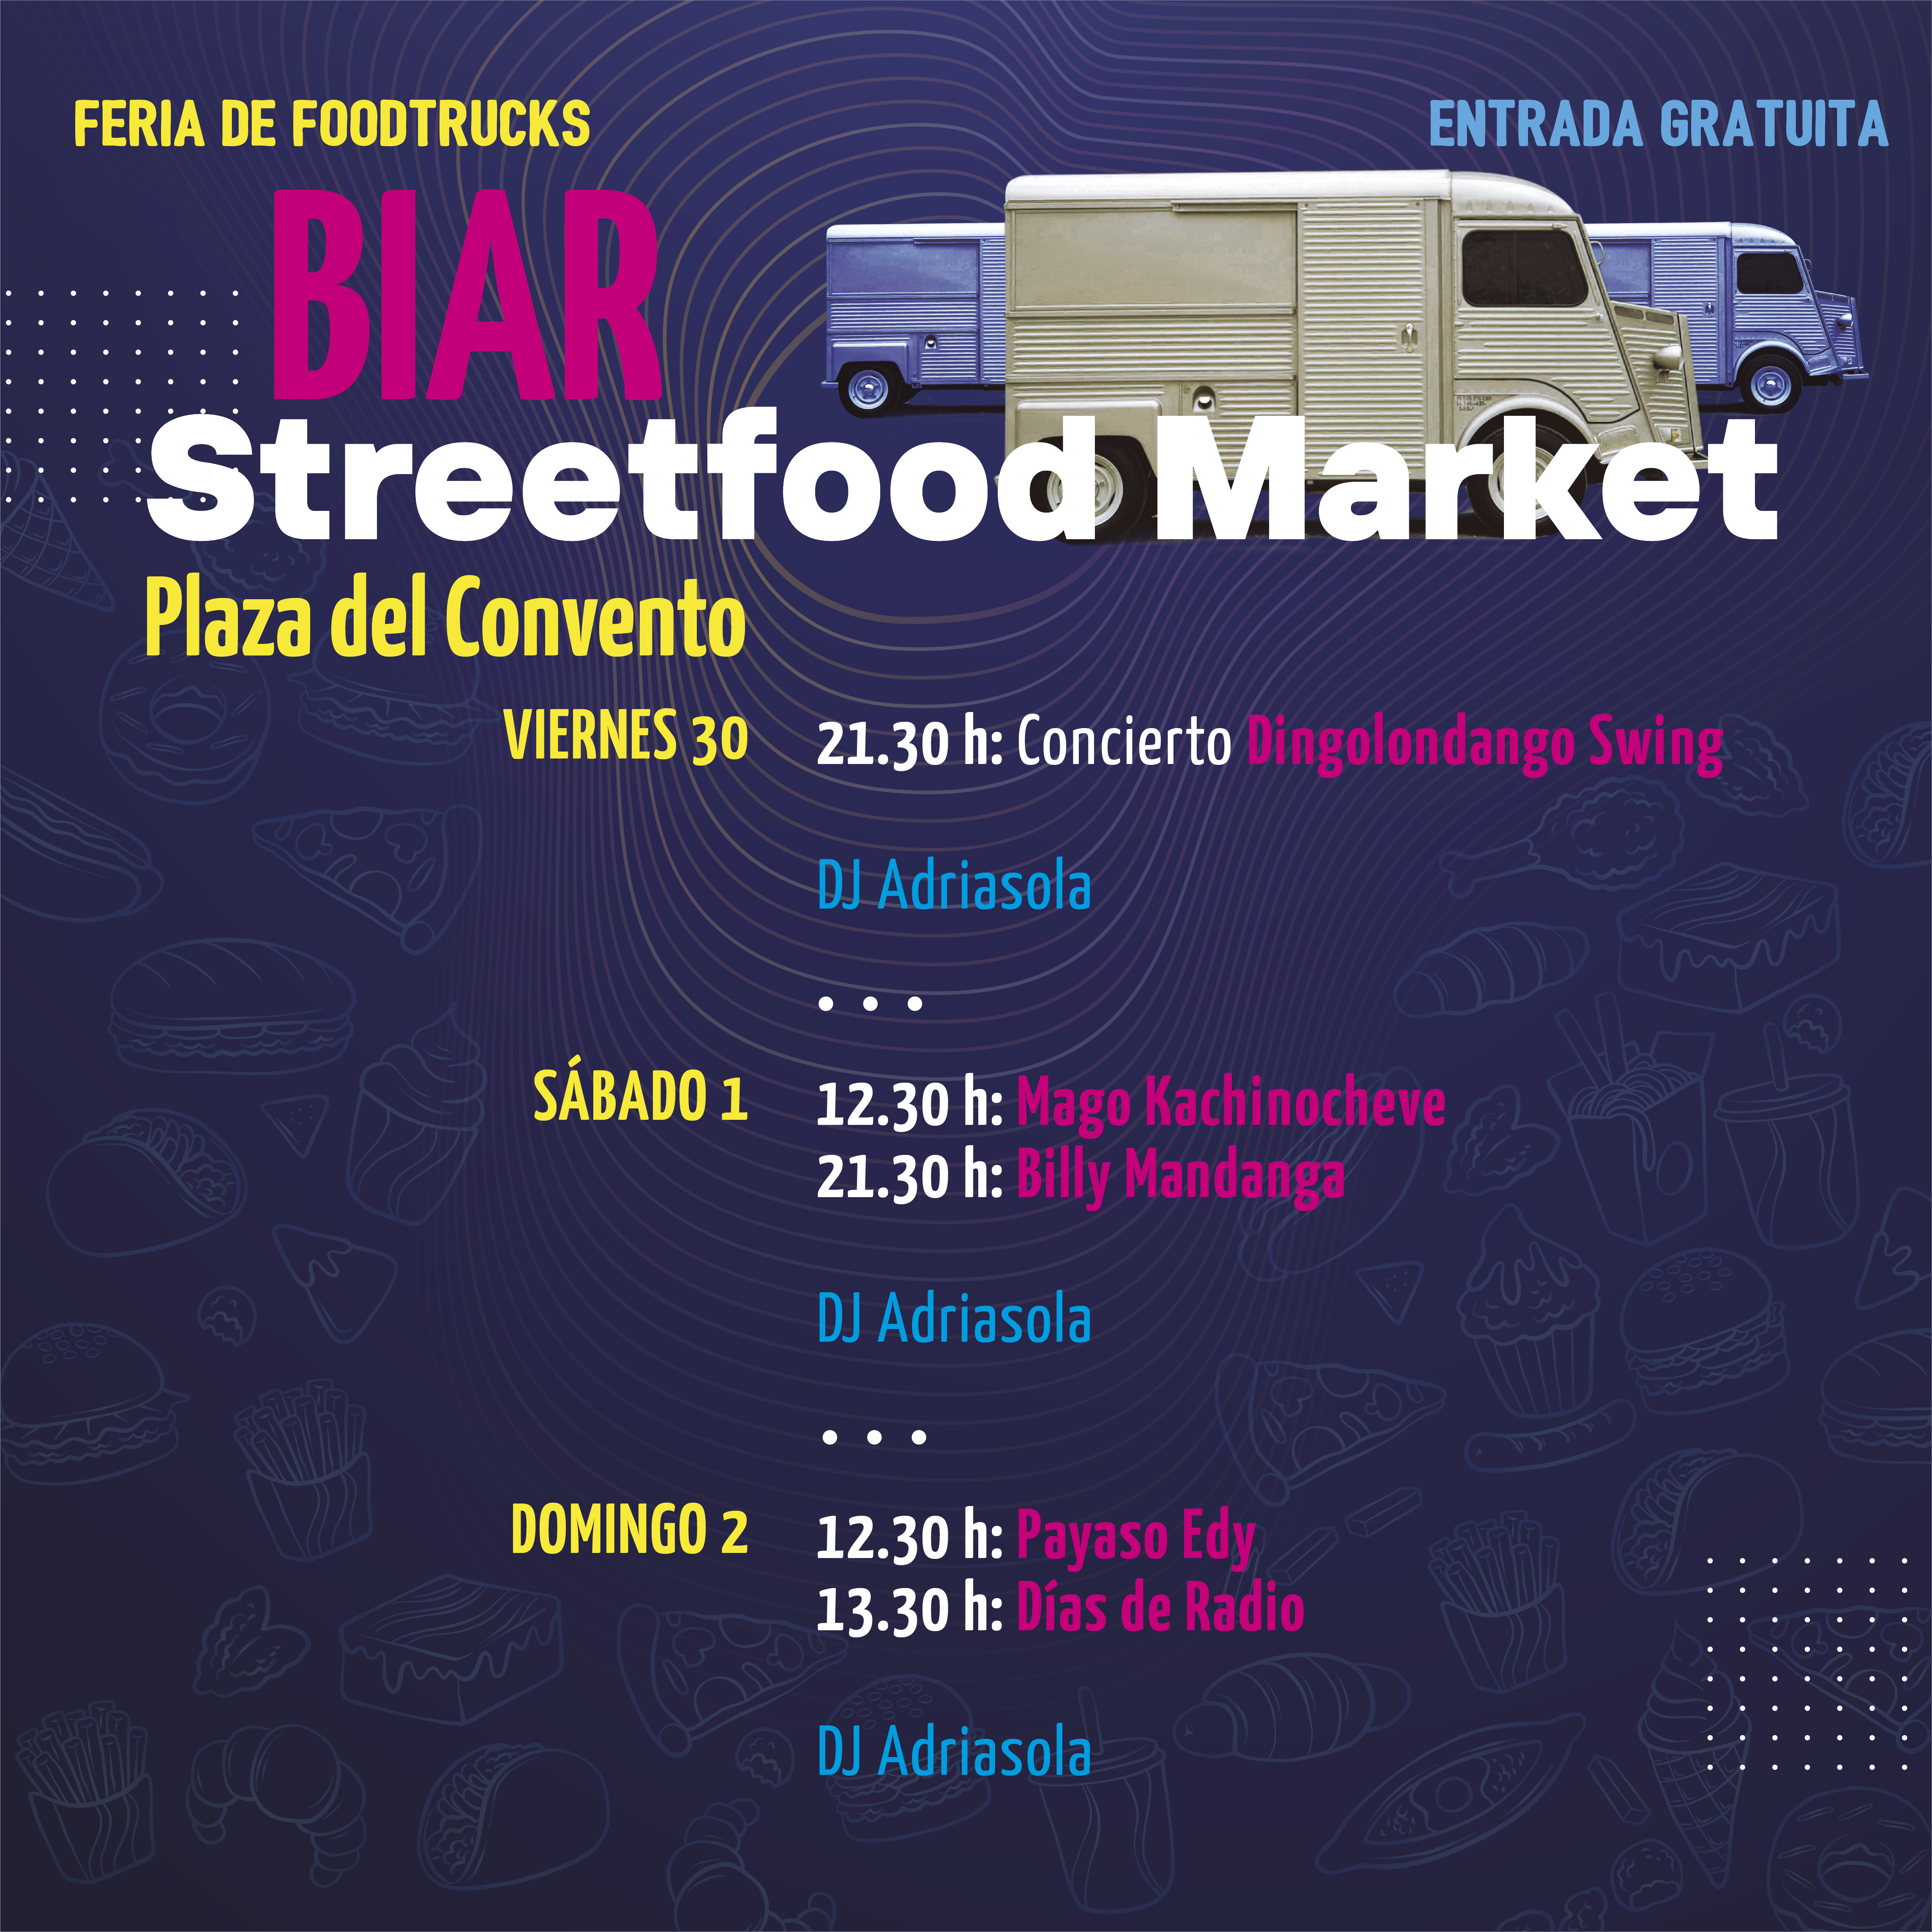 El Street Food Market llega por primera vez a Biar